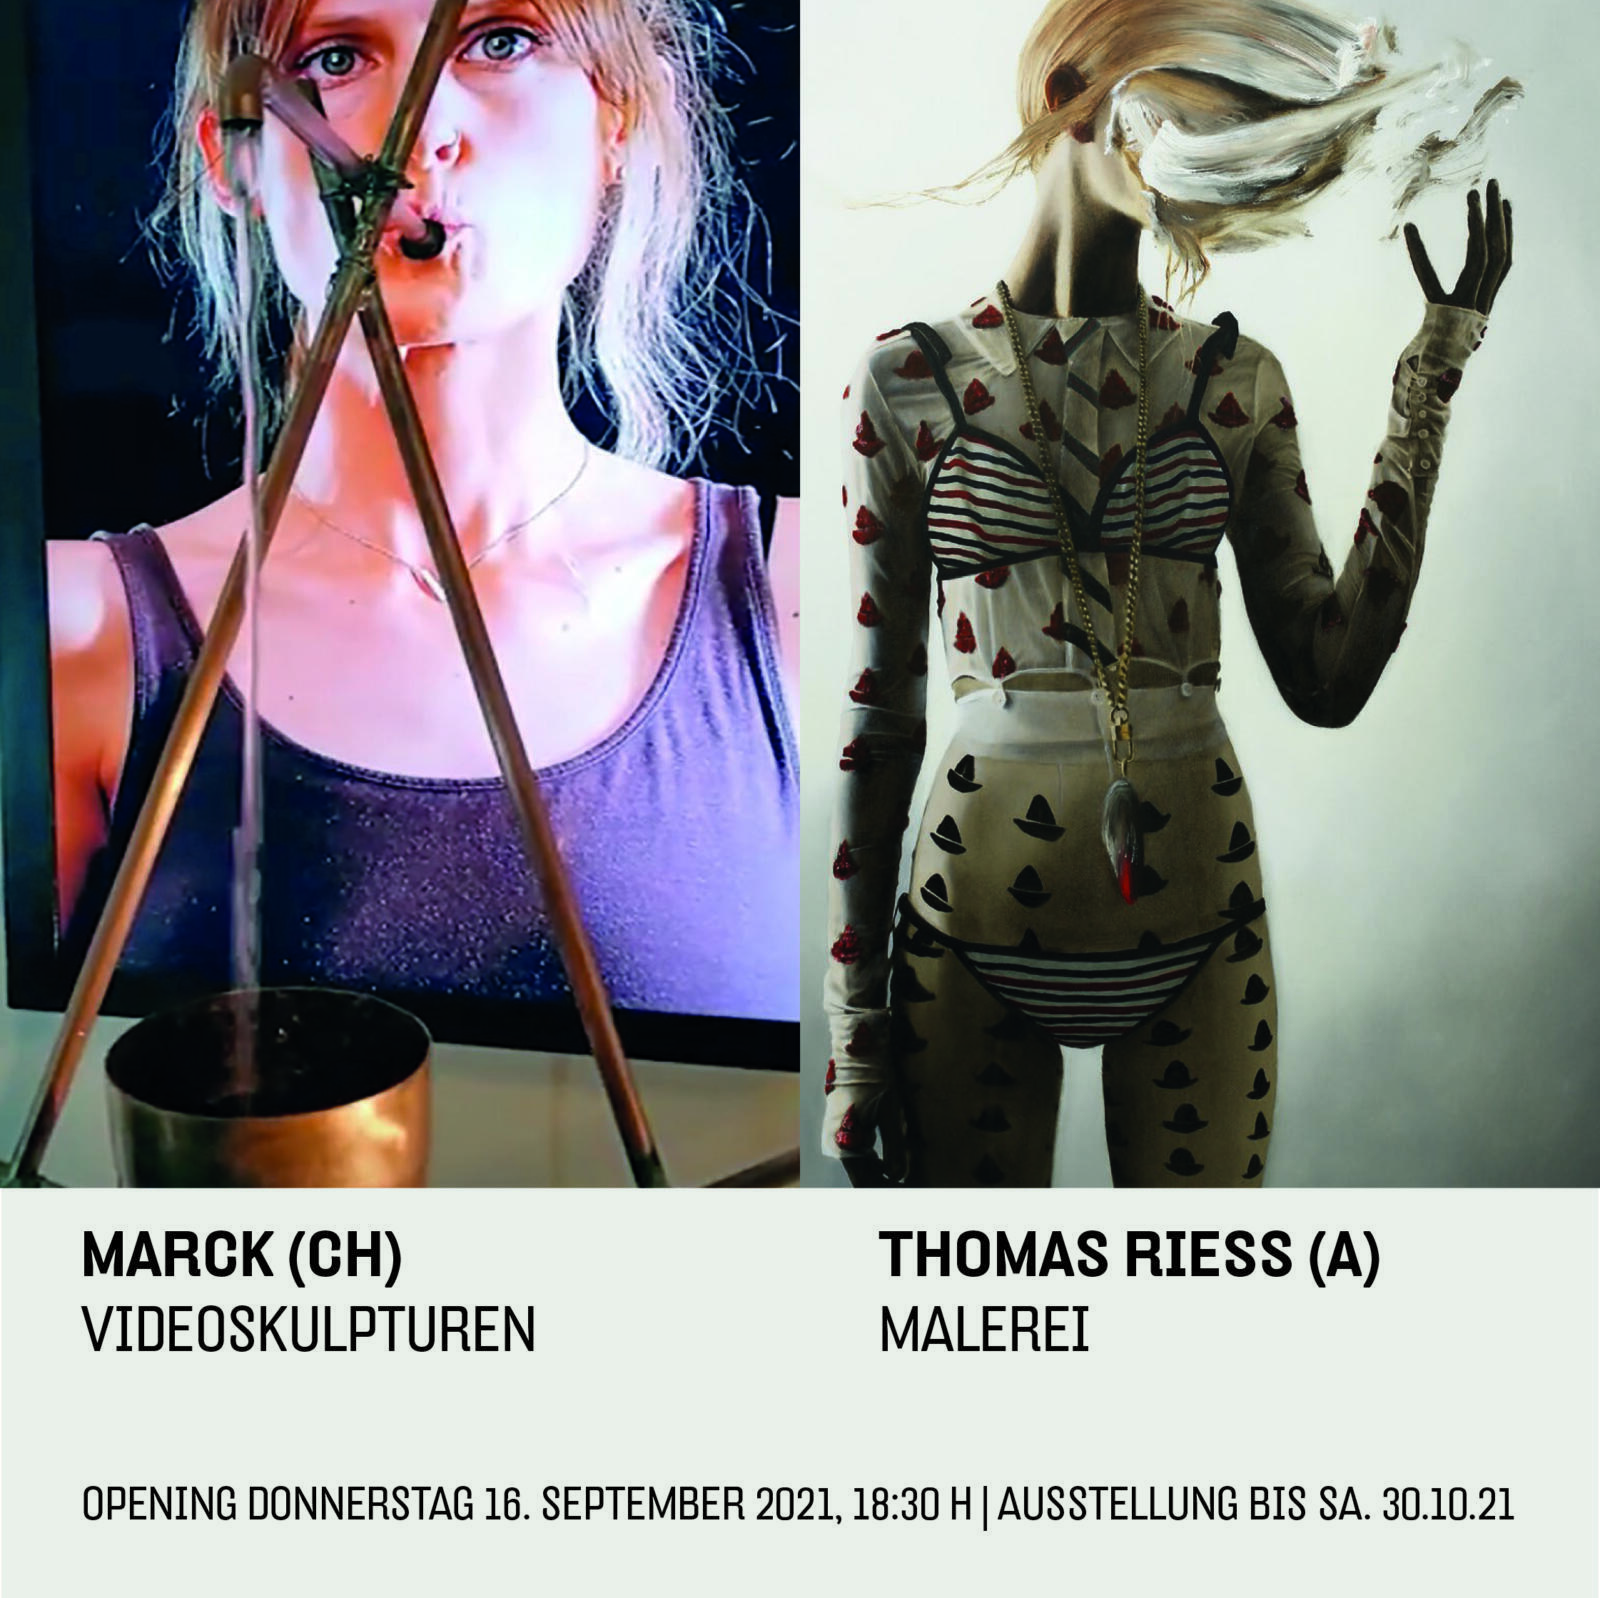 Exhibition MARCK & Thomas Riess